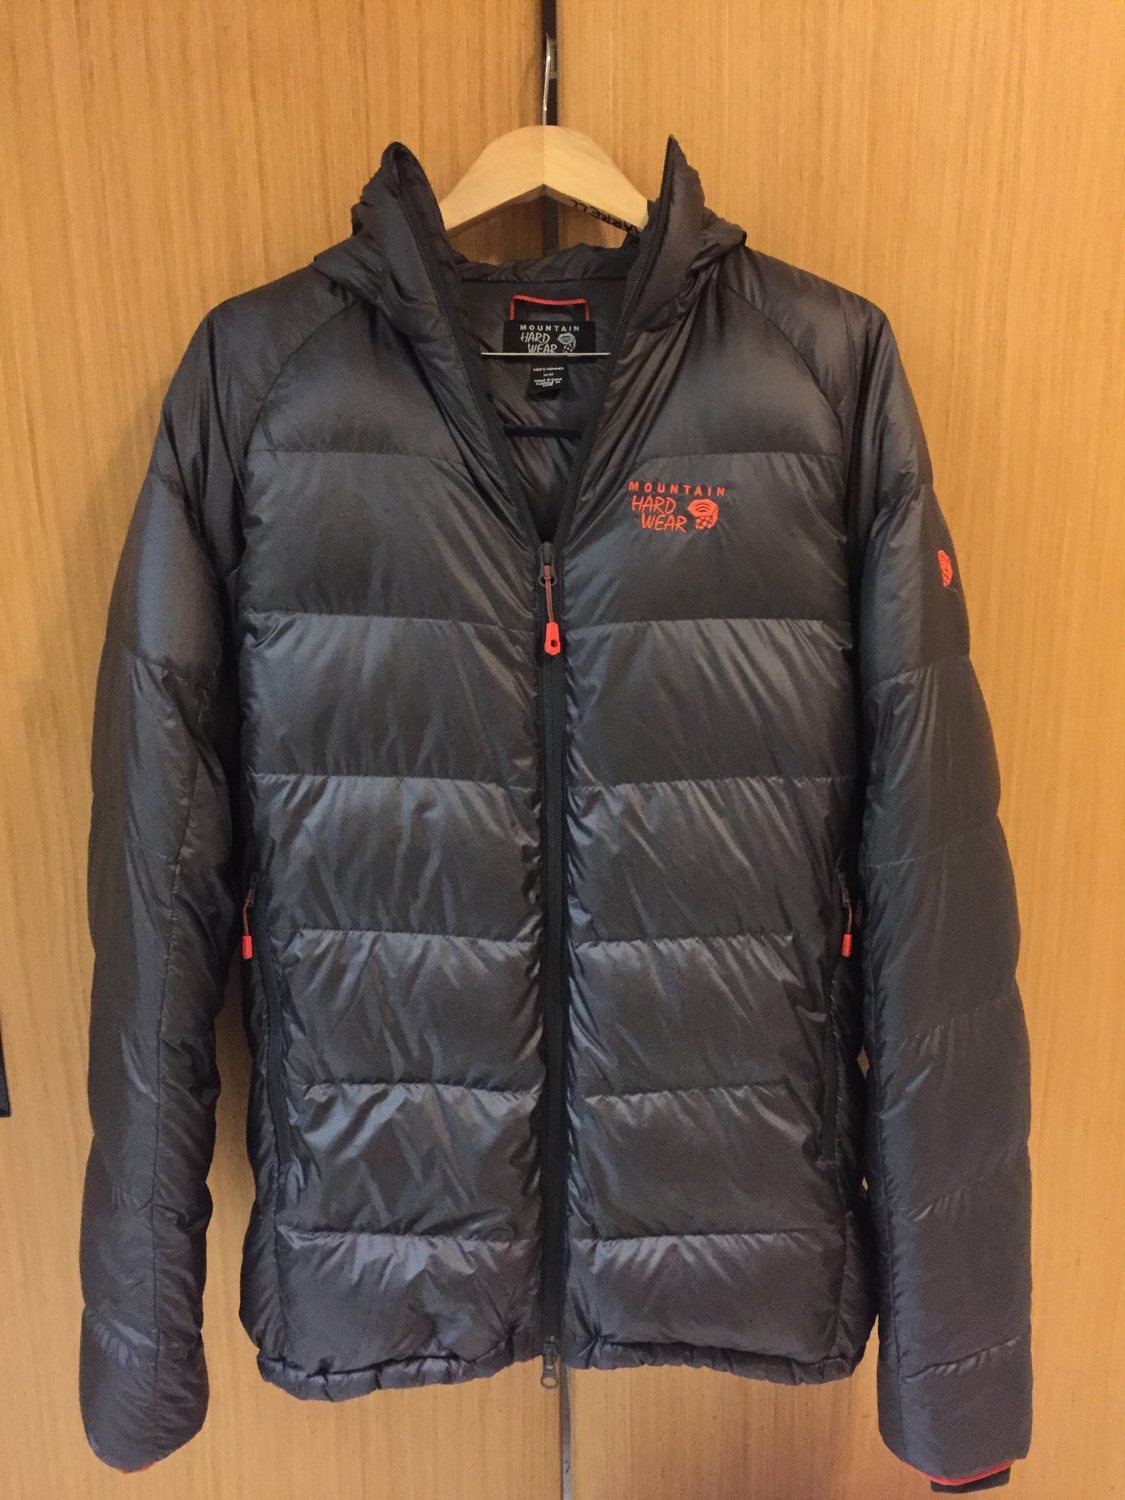 - Mountain Hardwear Phantom Hooded Down Jacket (BRAND NEW) - Medium ($325)